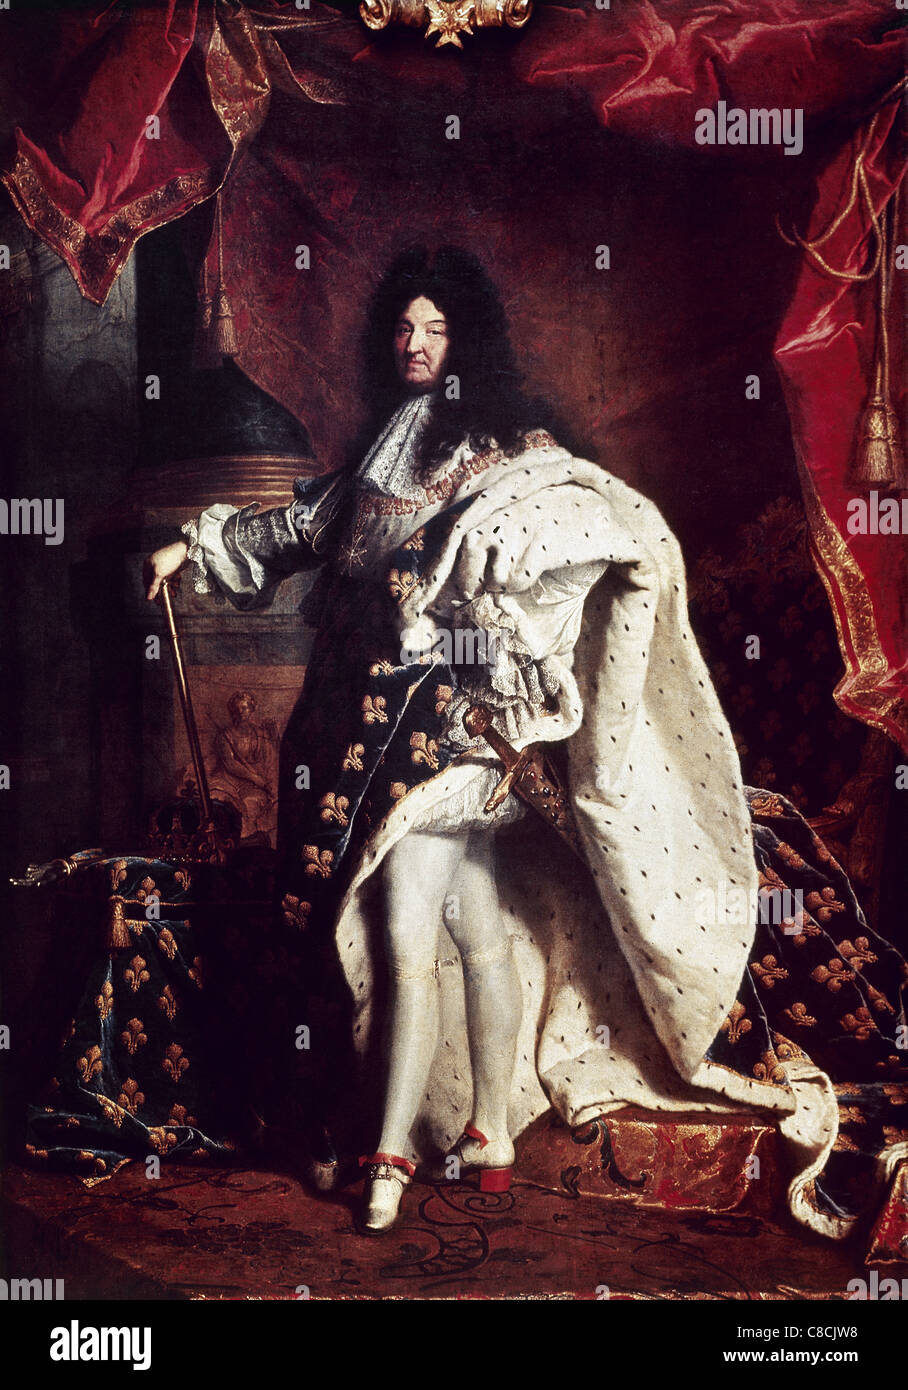 Louis XIV (1638-1715). King of France. Portrait by Hyacinthe RIgaud. 1701. Louvre Museum. Paris. France. Stock Photo